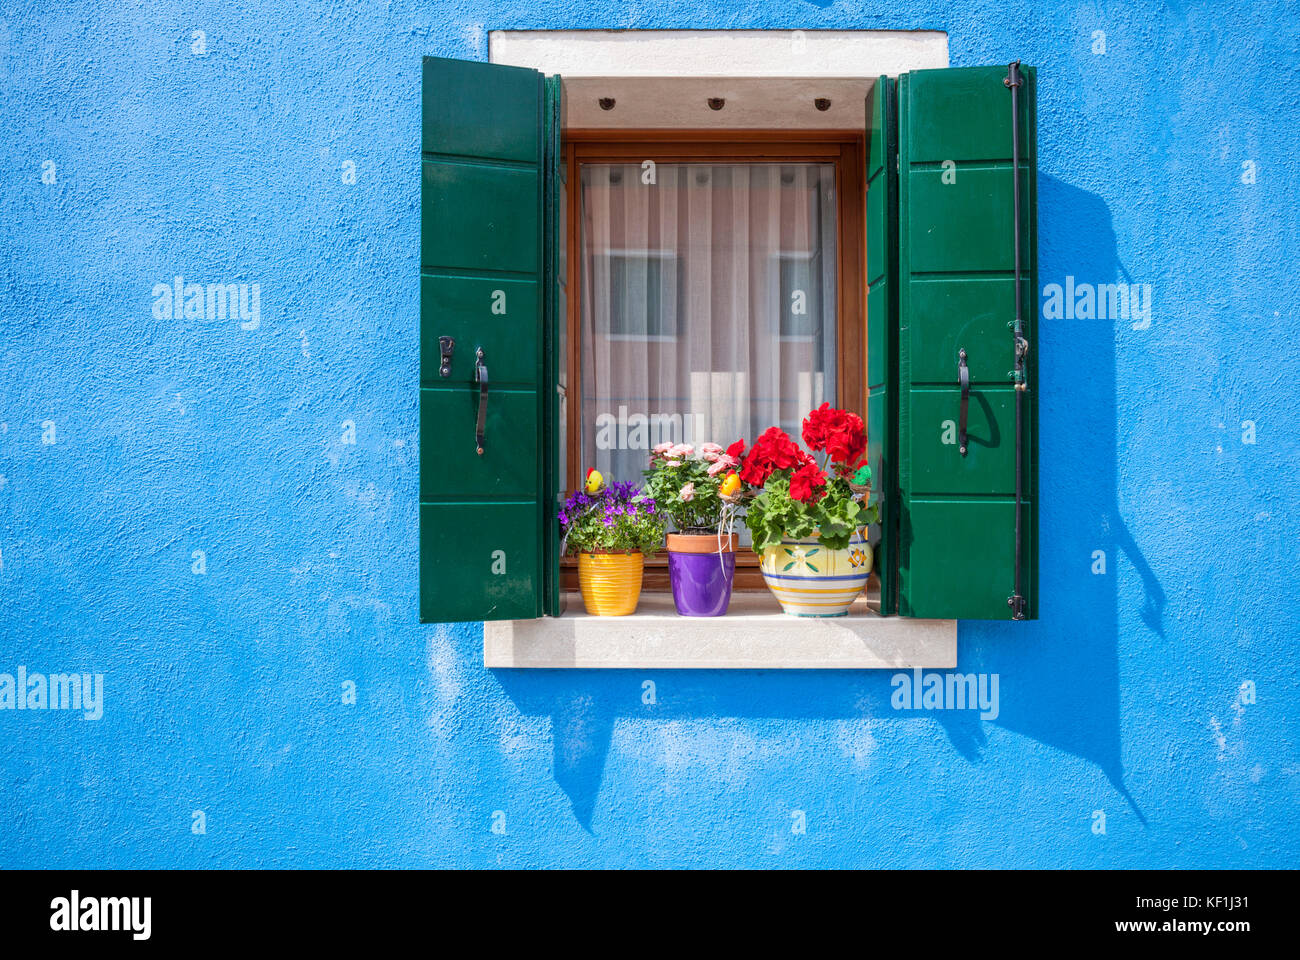 Venedig Italien Venedig blaue Wände Fenster mit grünen Fensterläden und Töpfe Blumen Burano Italien eu Europa Stockfoto